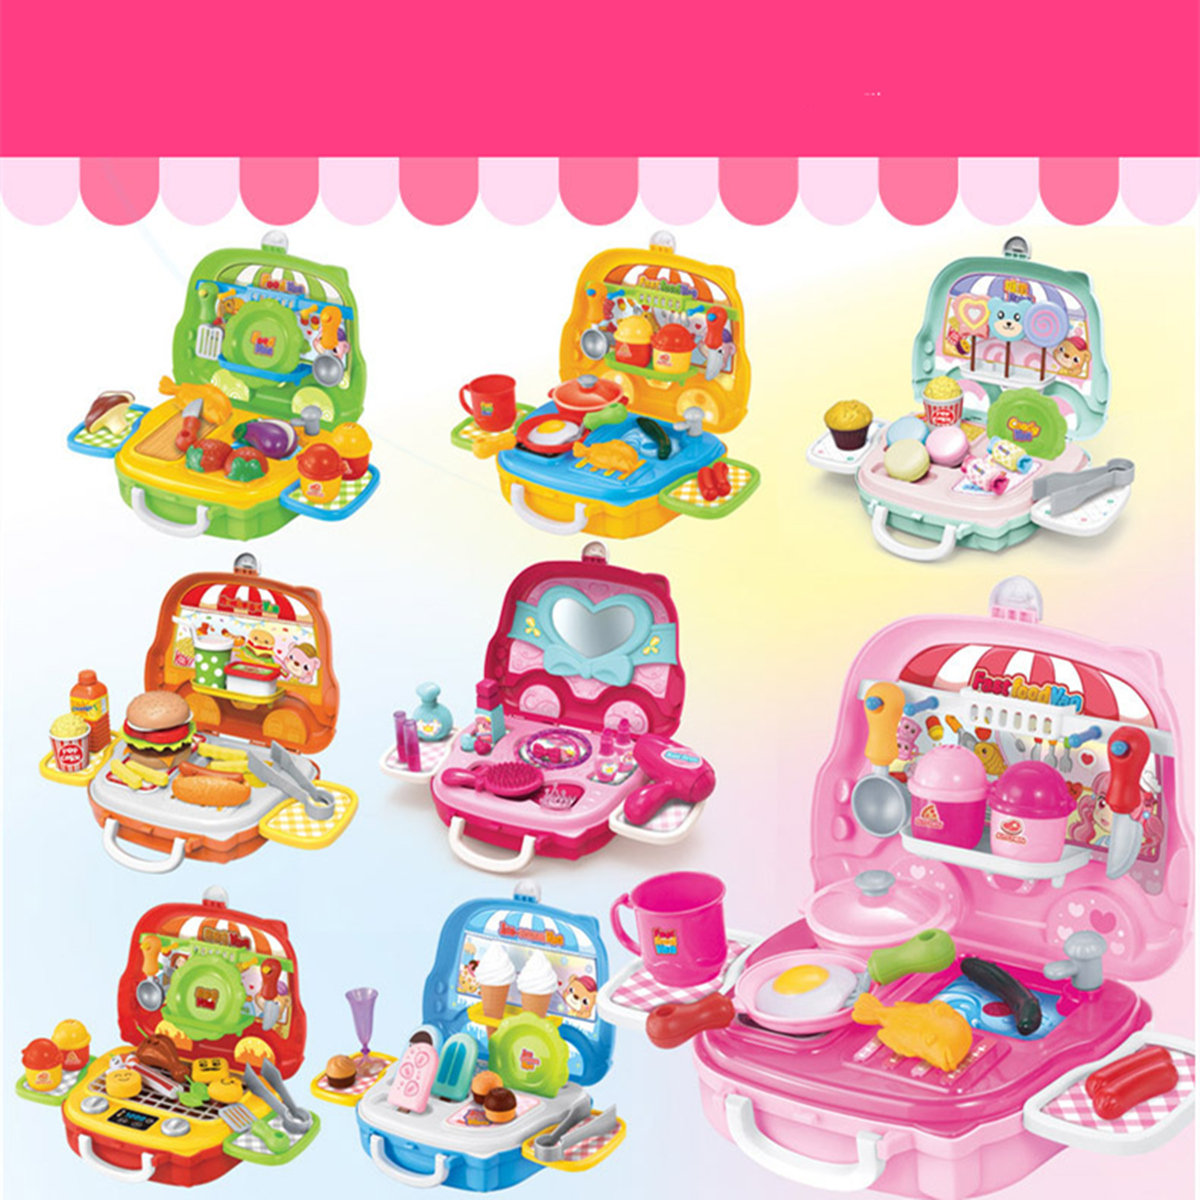 Pretend-Play-Set-Kids-Dream-Suitcase-Educational-Role-Play-Boys-Girls-Blocks-Toys-Set-1381595-1